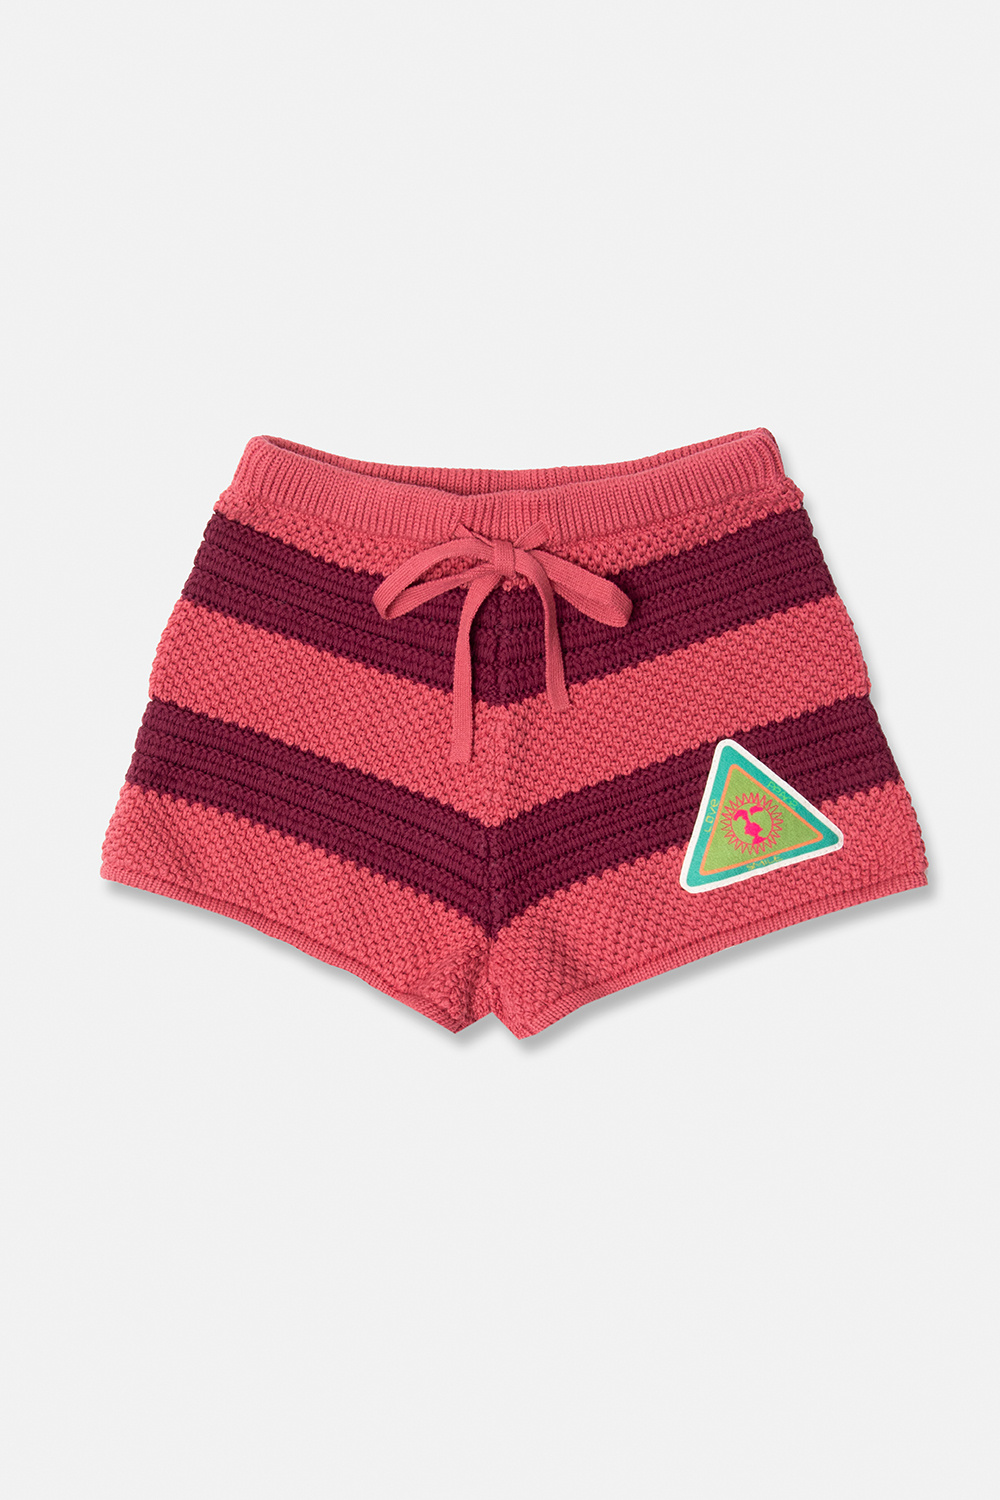 Zimmermann Kids Crochet shorts